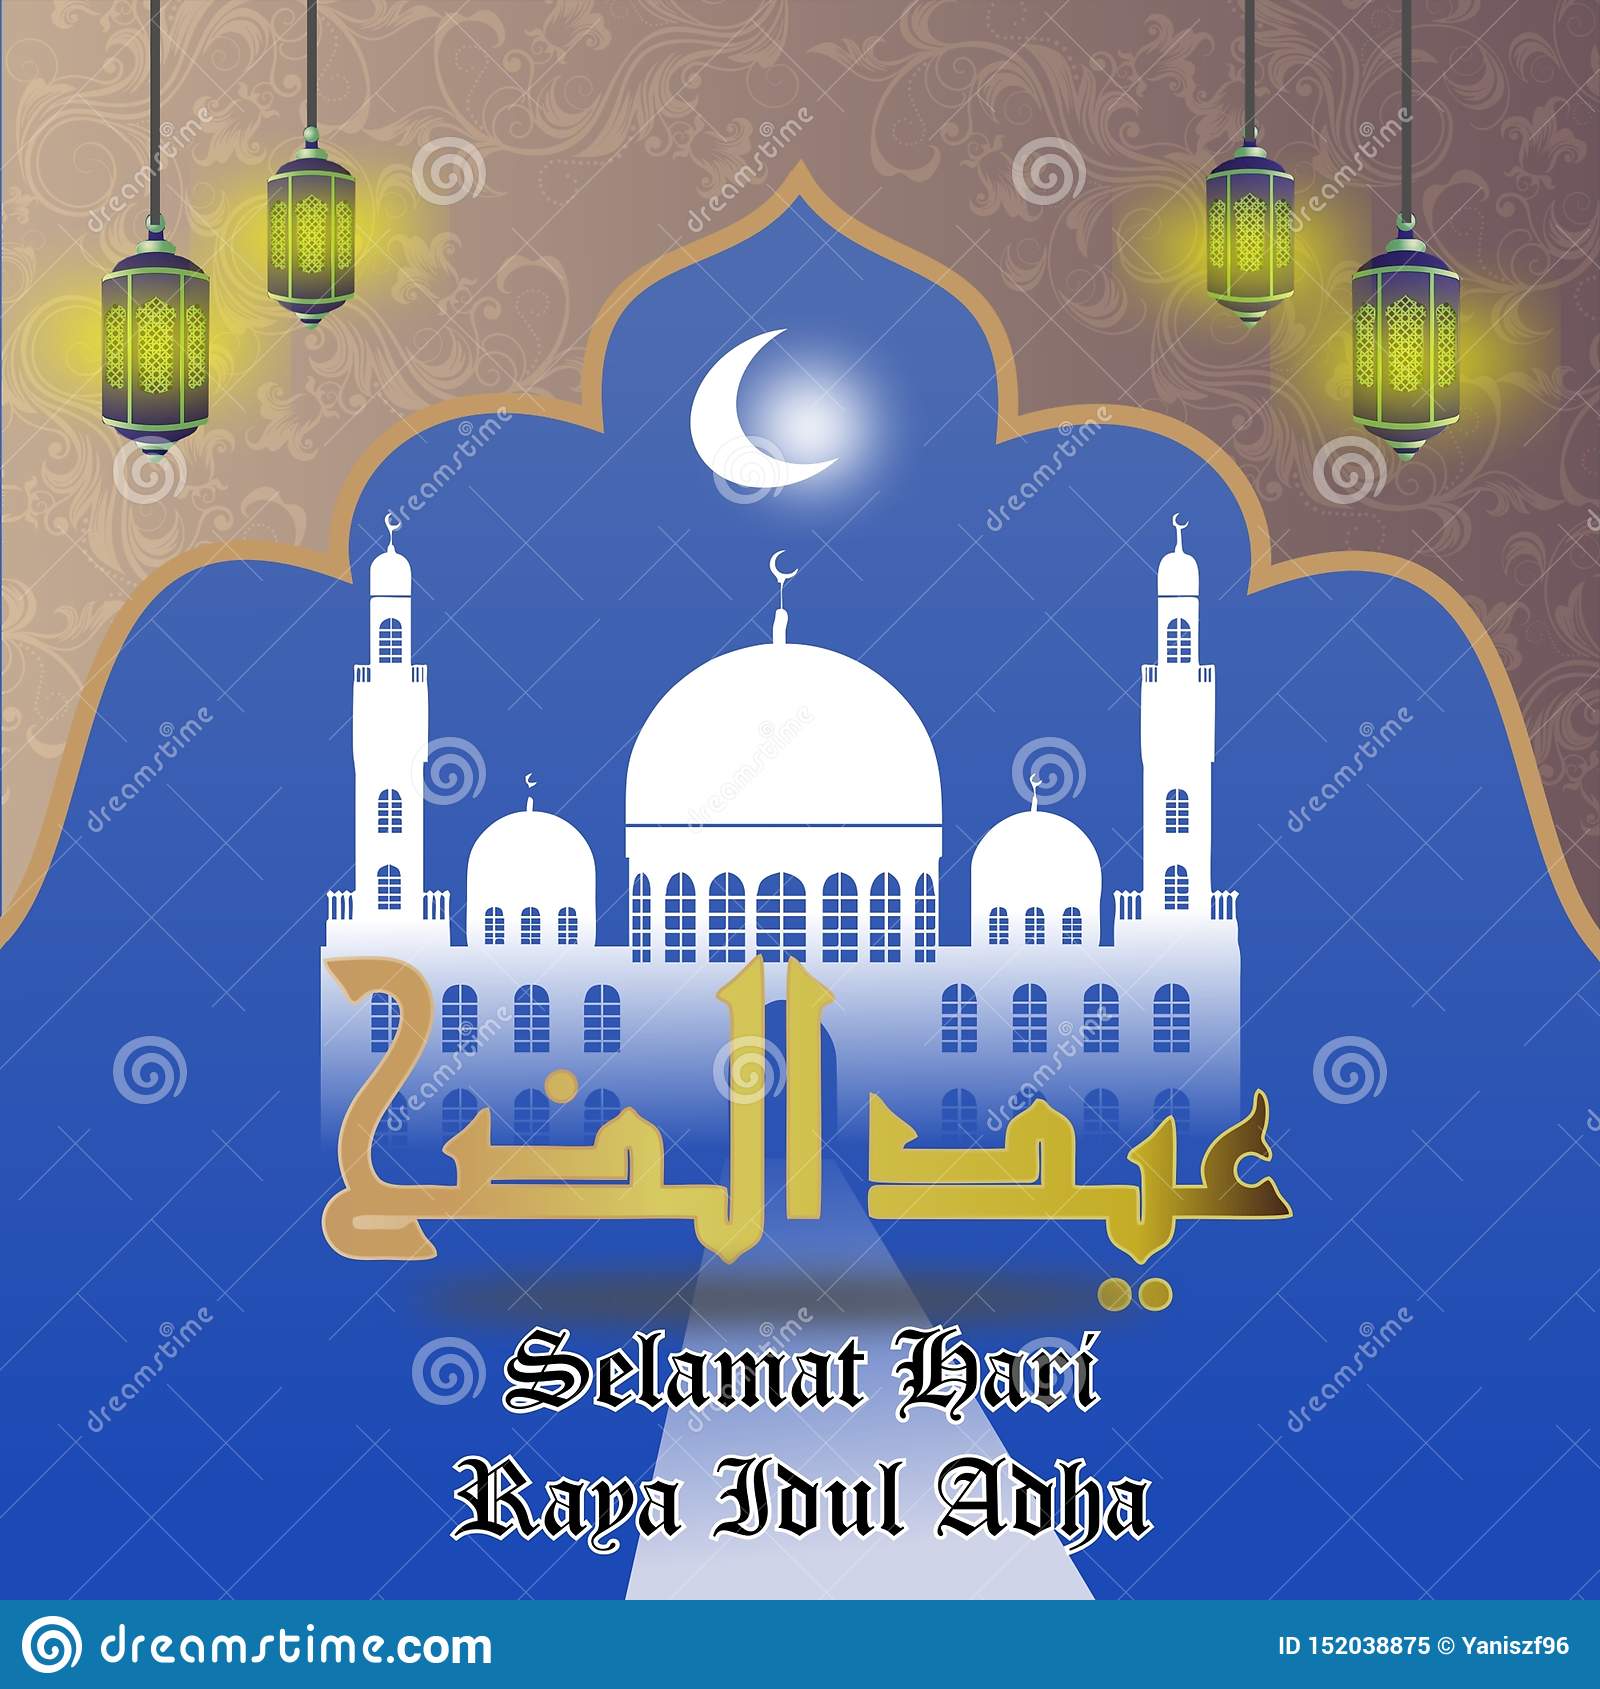 Background Selamat Hari Raya Idul Adha